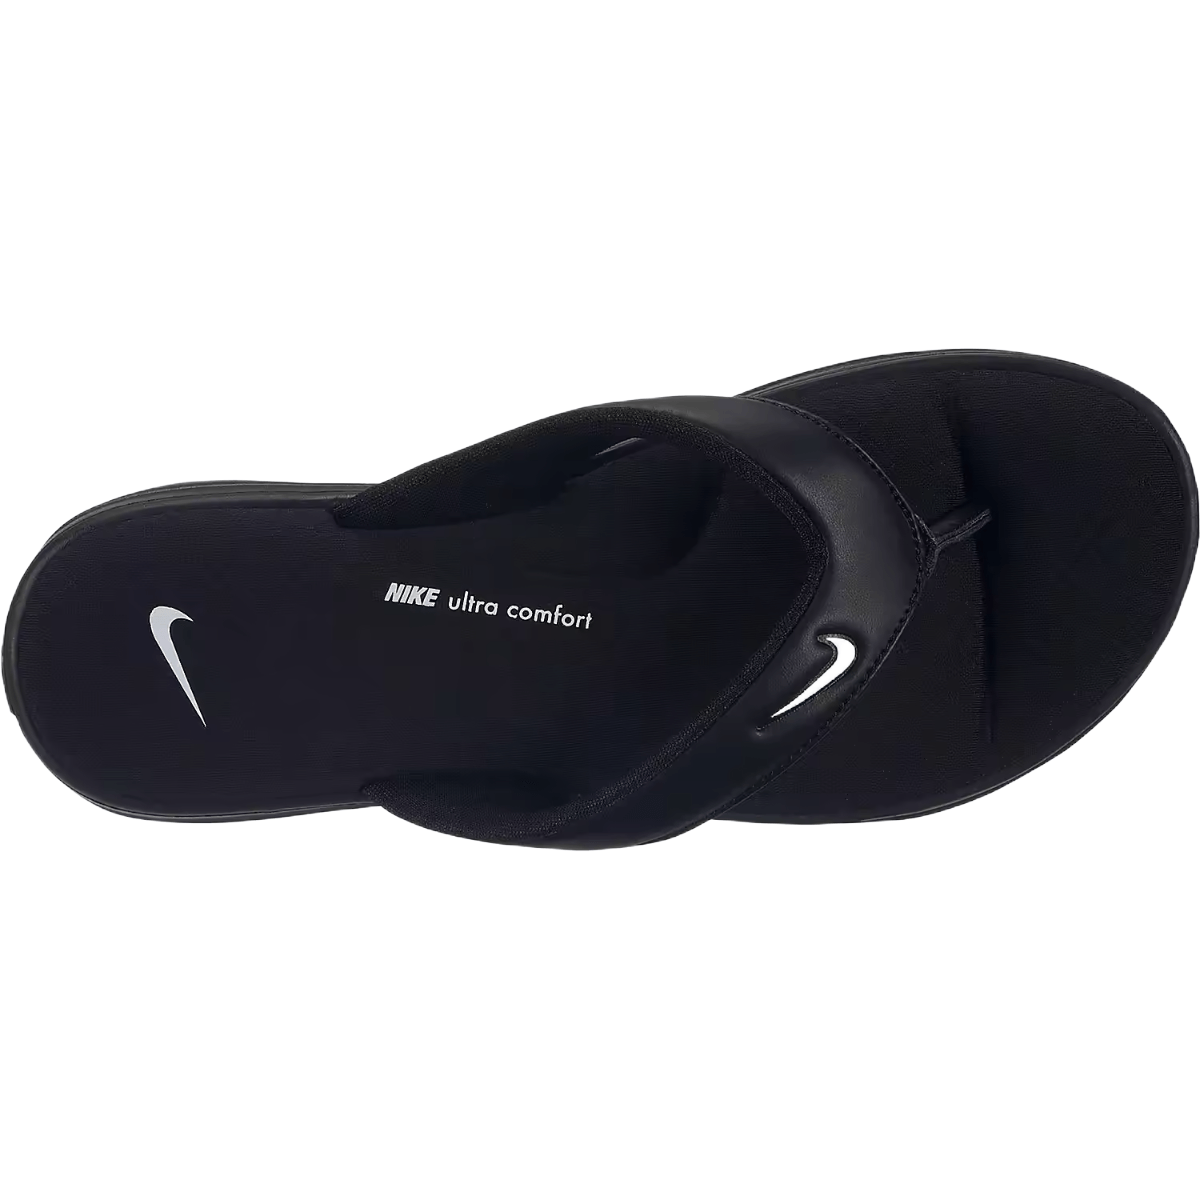 Negligencia Están familiarizados Solenoide Nike Ultra Comfort 3 Flip-Flop - Women's - Als.com